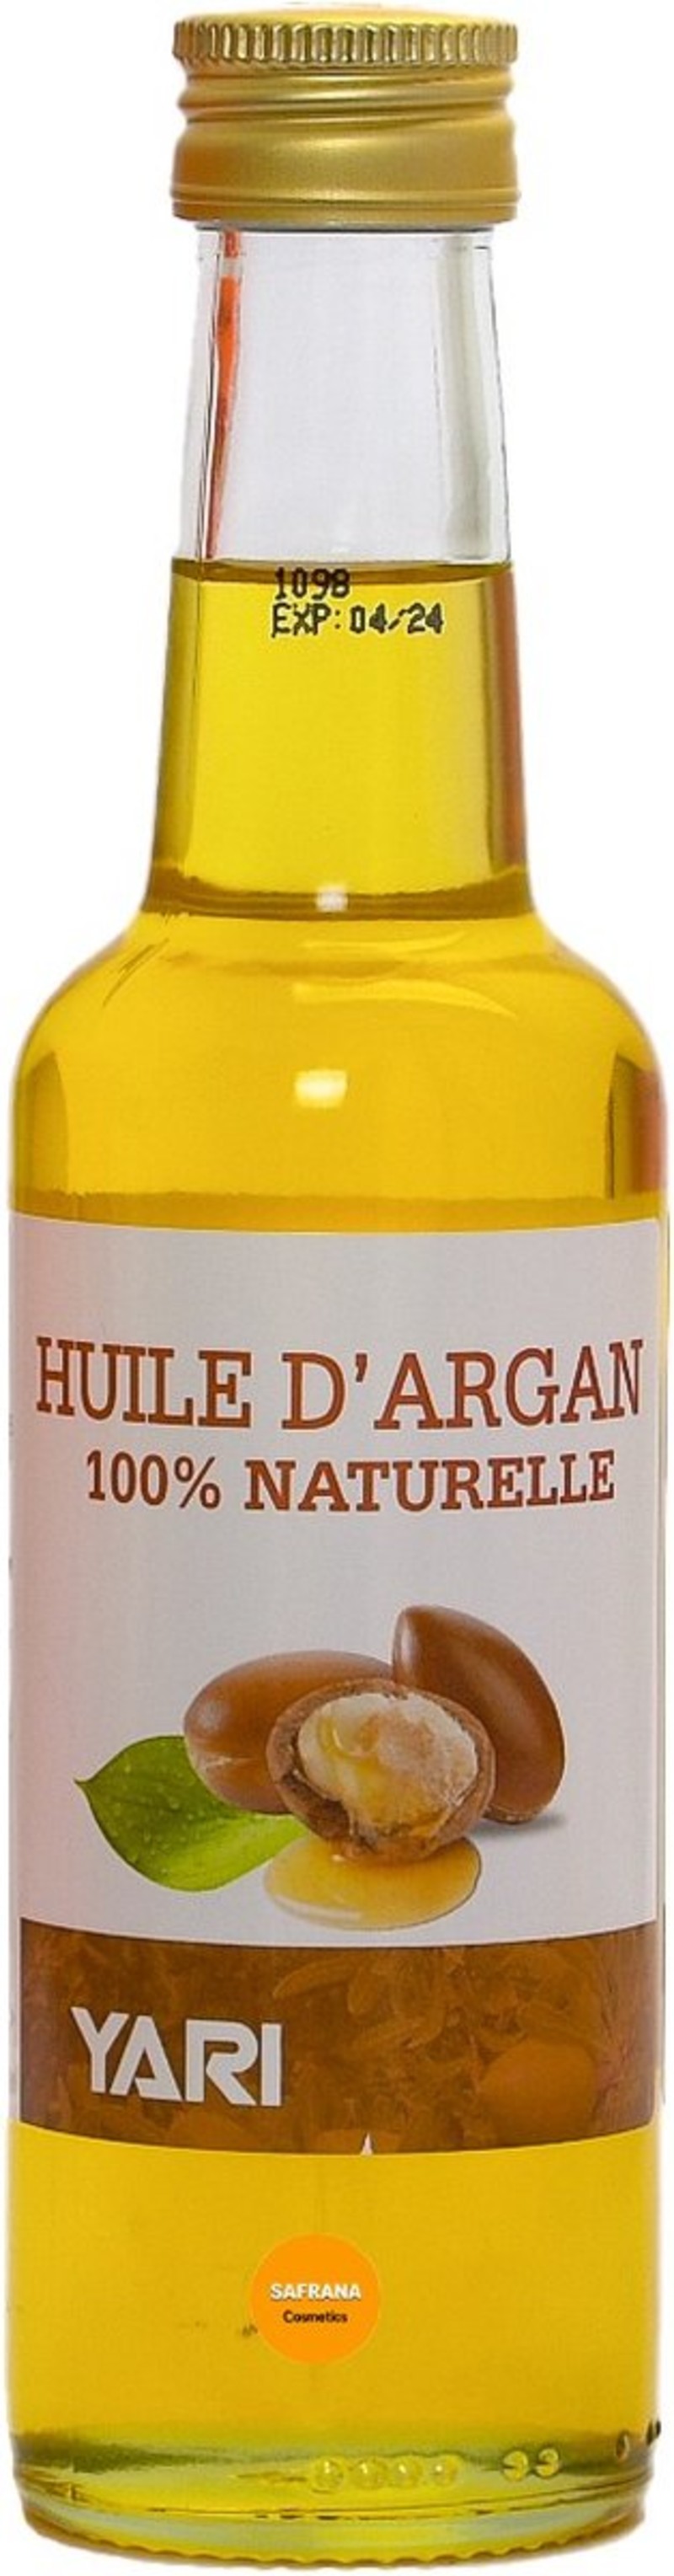 yari huile d'argan 100% naturelle 250 mL